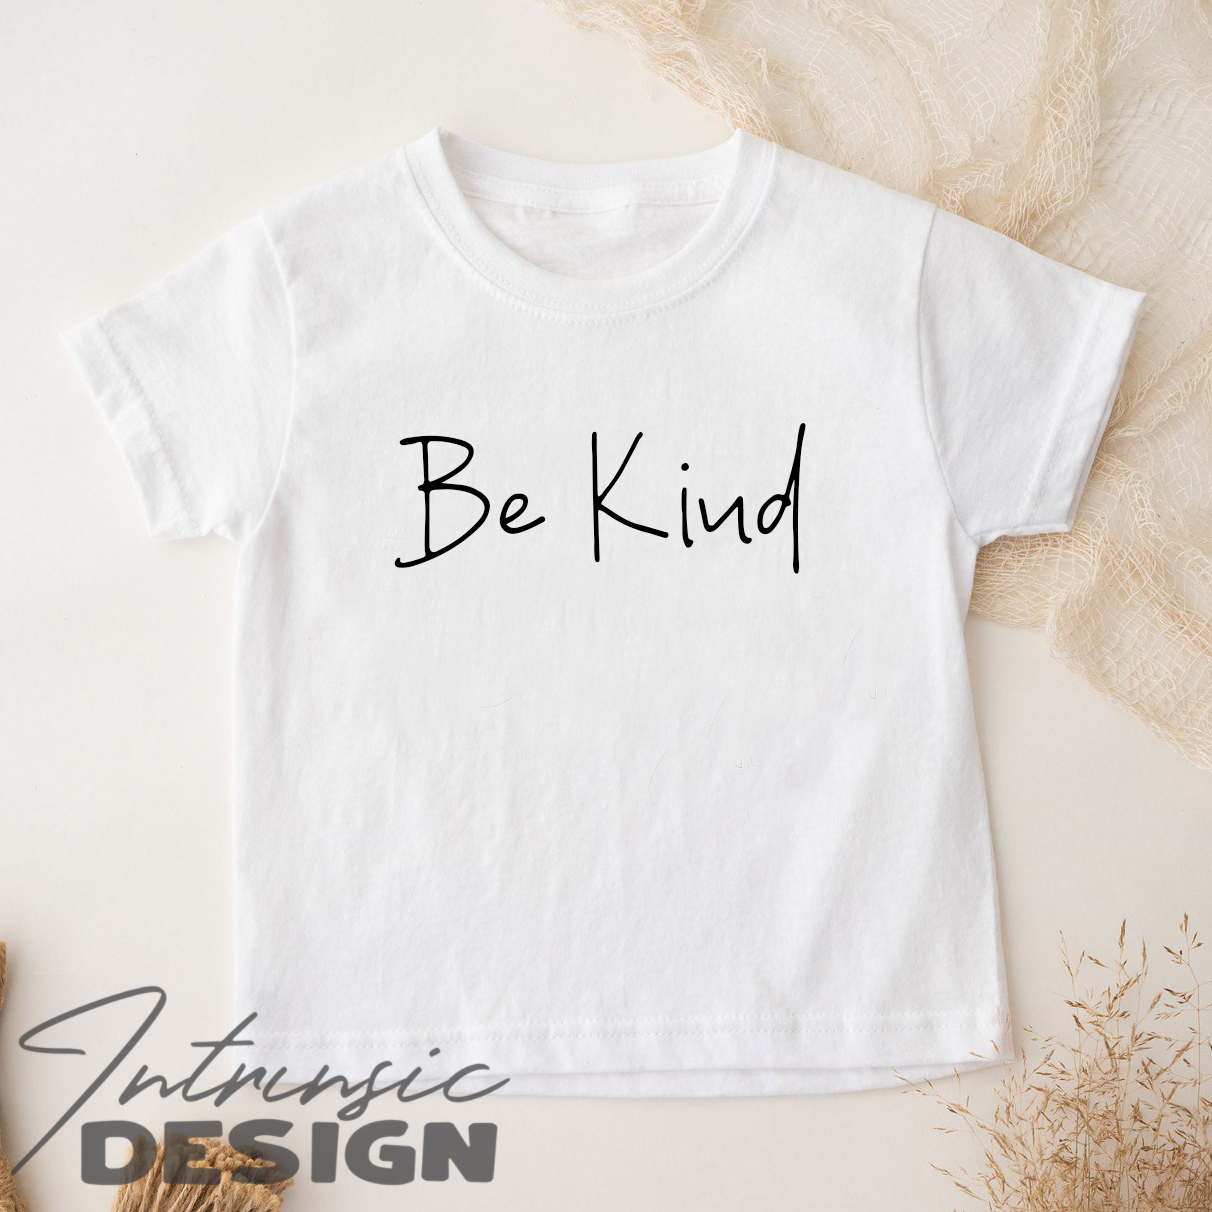 Be kind - kids tee